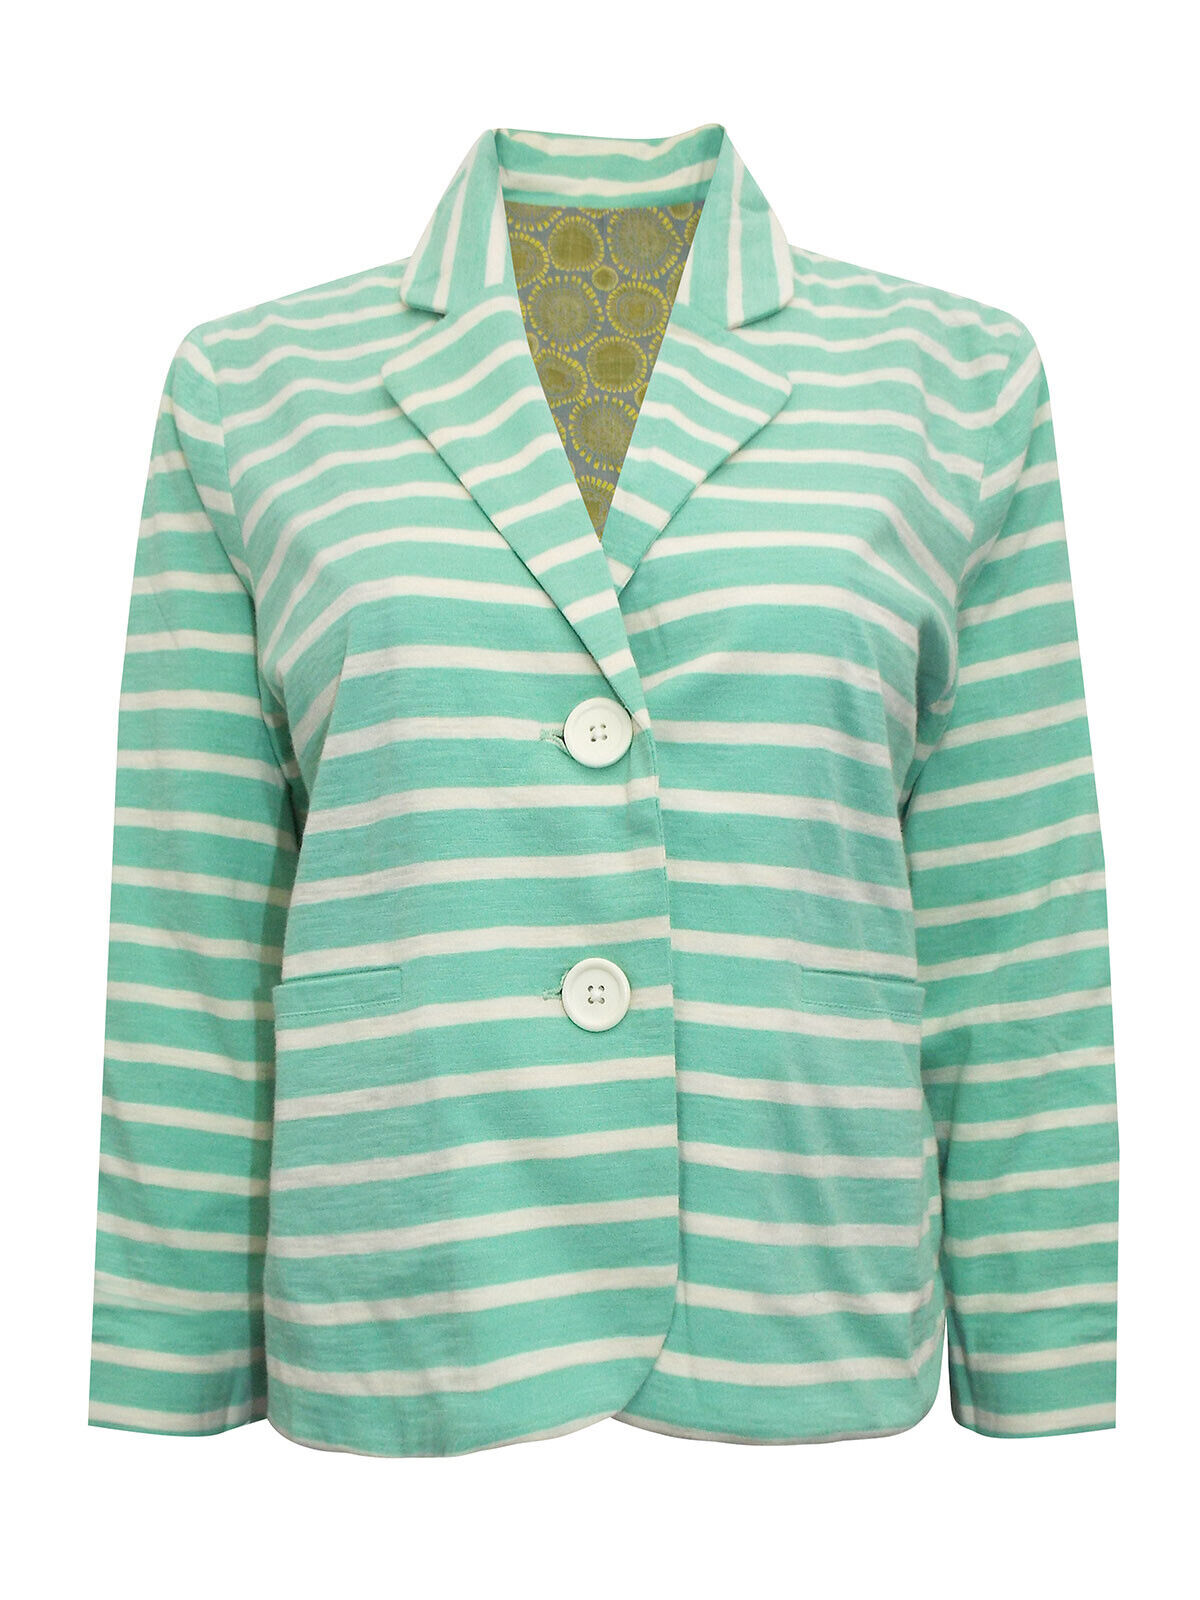 EX Seasalt Aqua Stripe Cotton Knit Jacket in Size 10